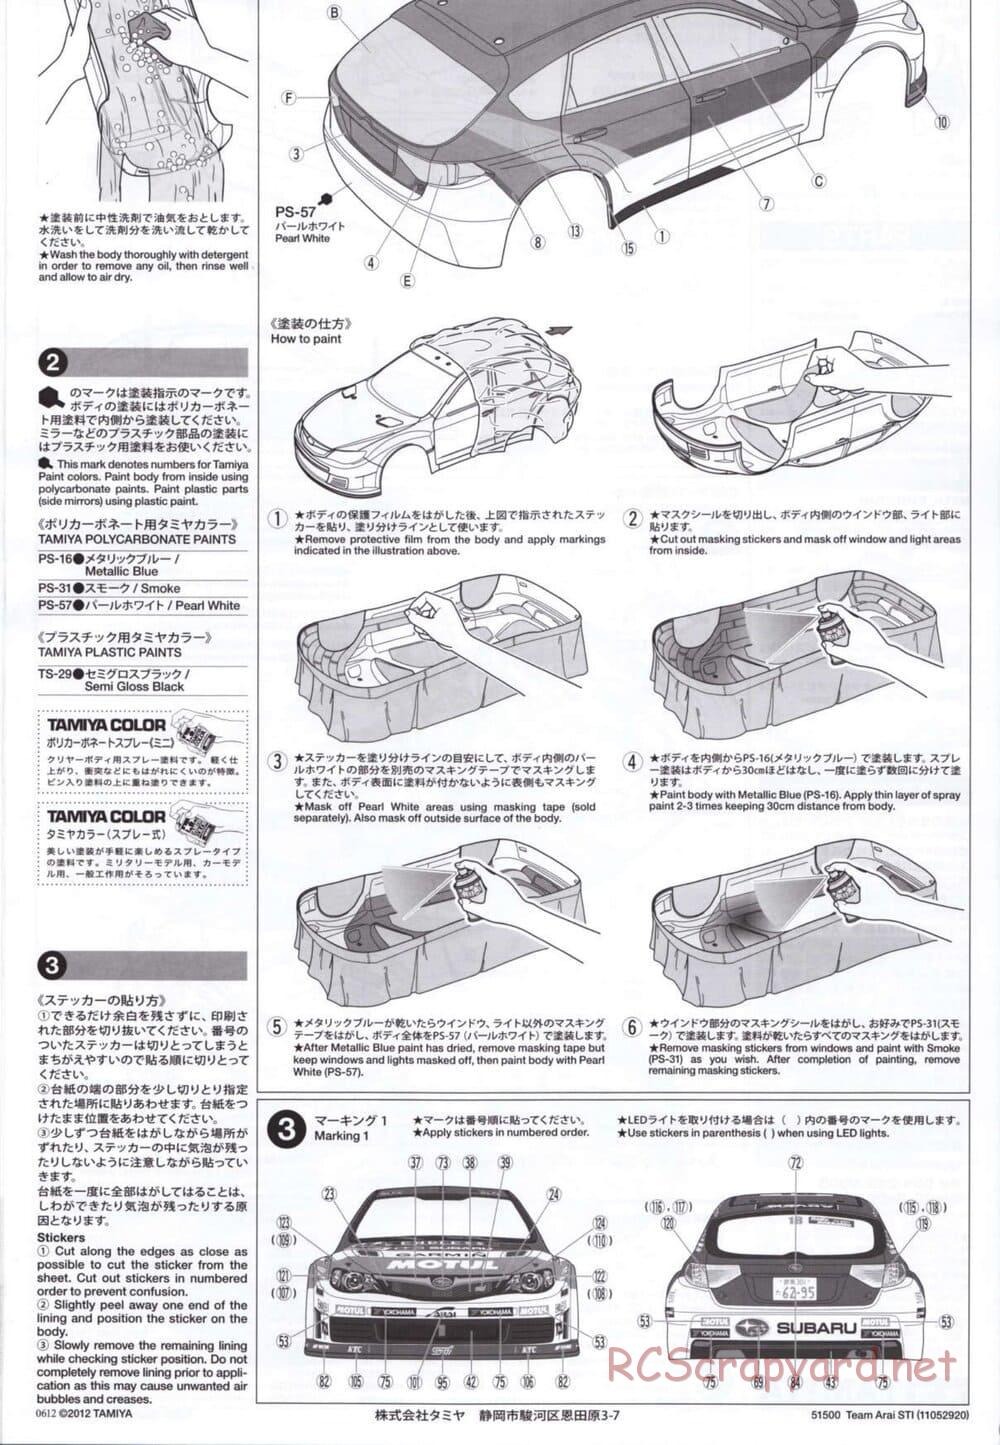 Tamiya - Subaru Impreza WRX STi Team Arai - XV-01 Chassis - Body Manual - Page 2